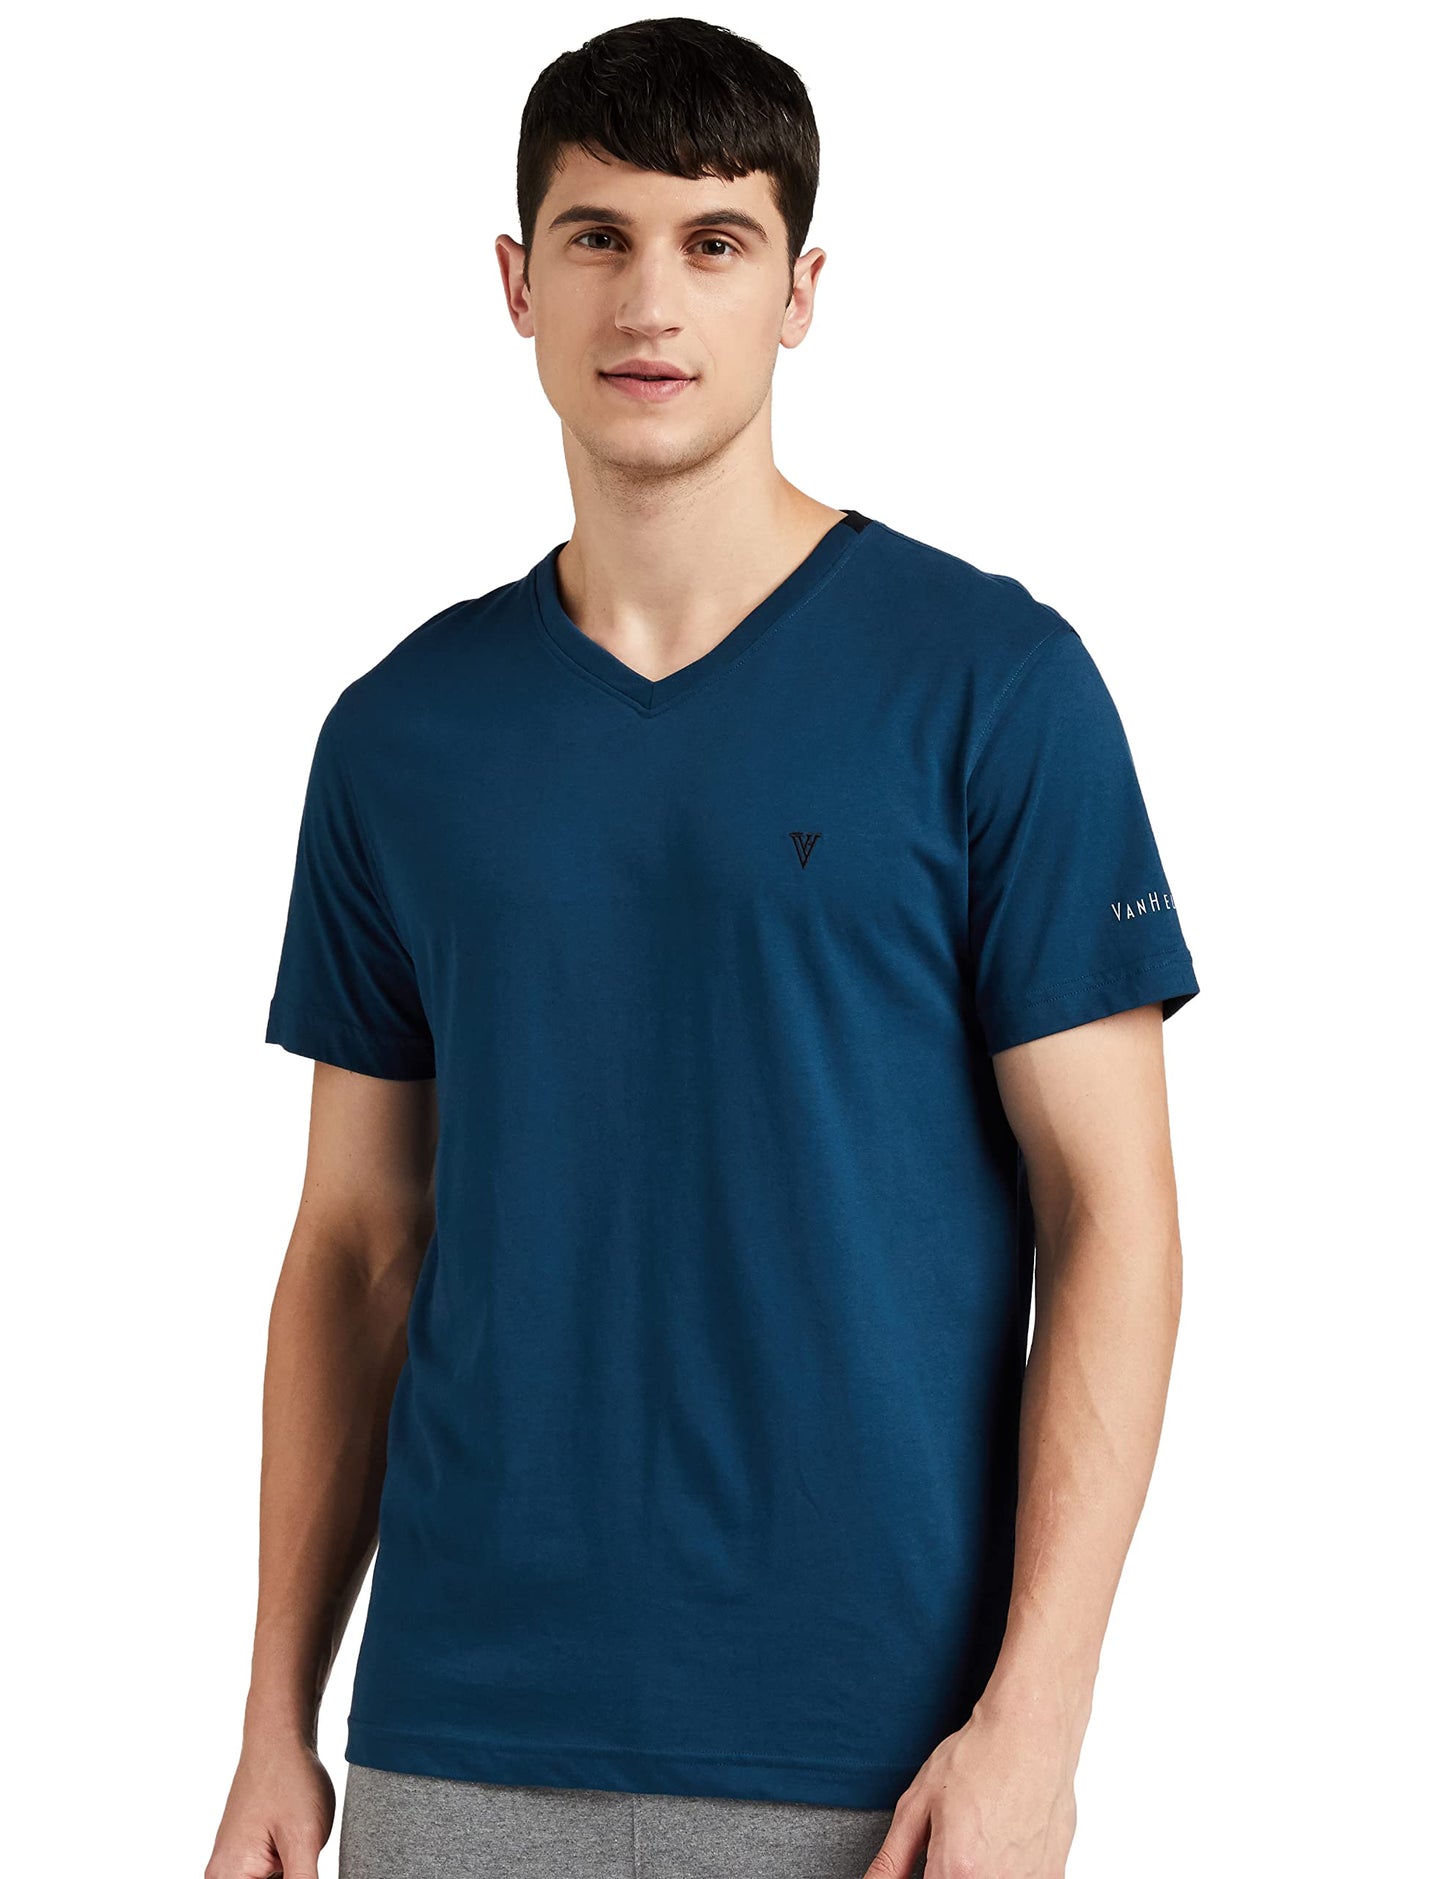 Van Heusen Men Athleisure Smart Tech T-Shirt - Easy Stain Release, Anti Stat, Ultra Soft_60001_Deep Sea_L